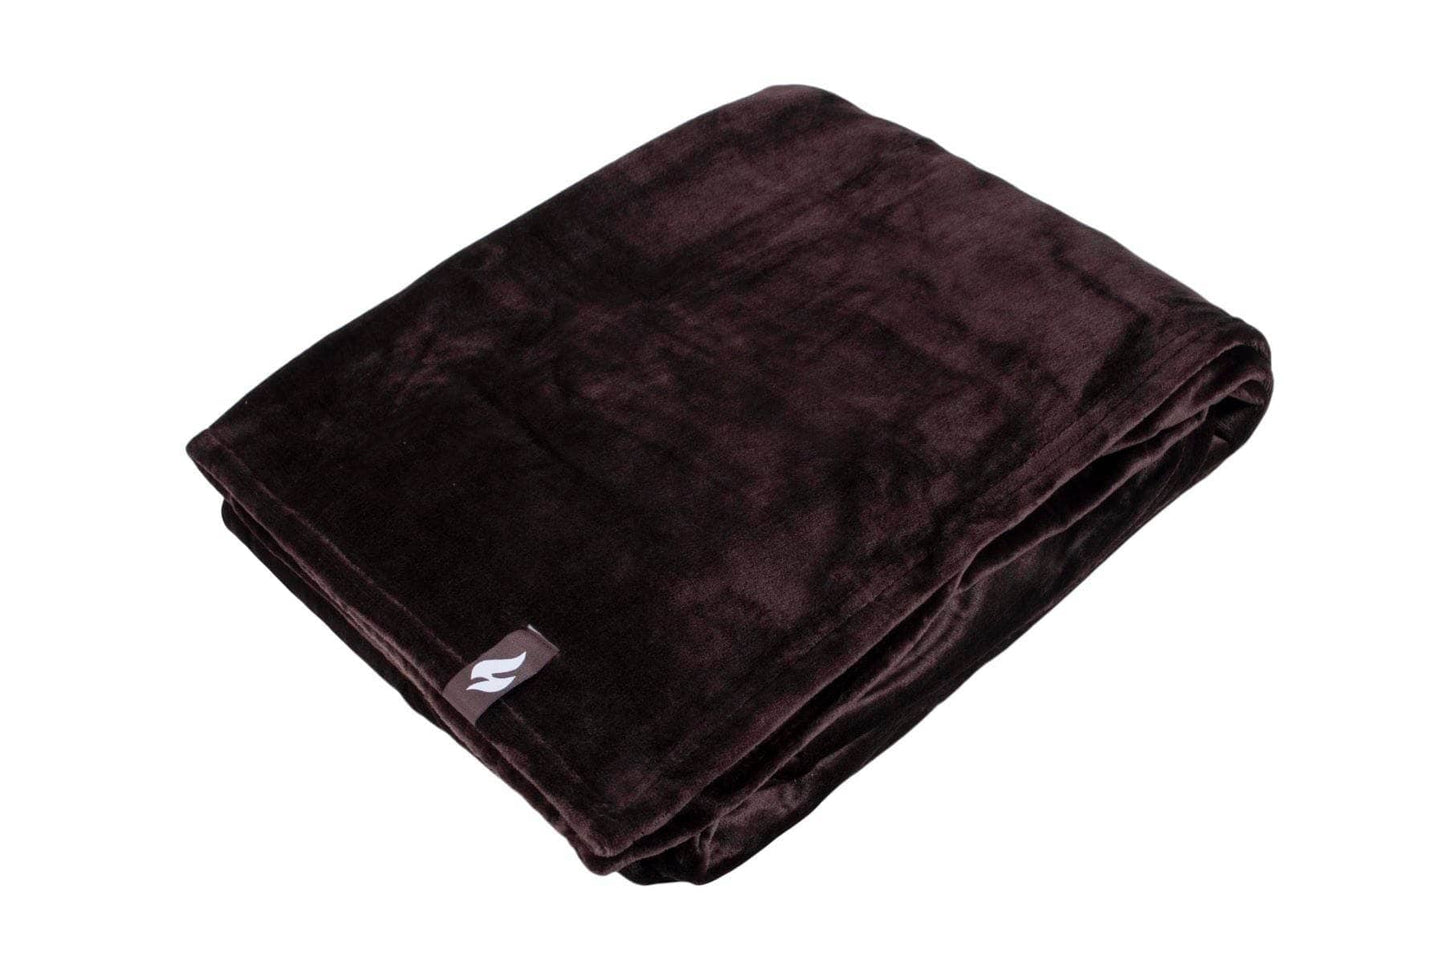 Homeware  -  Heat Holder Blanket - Hot Chocolate  -  60009948